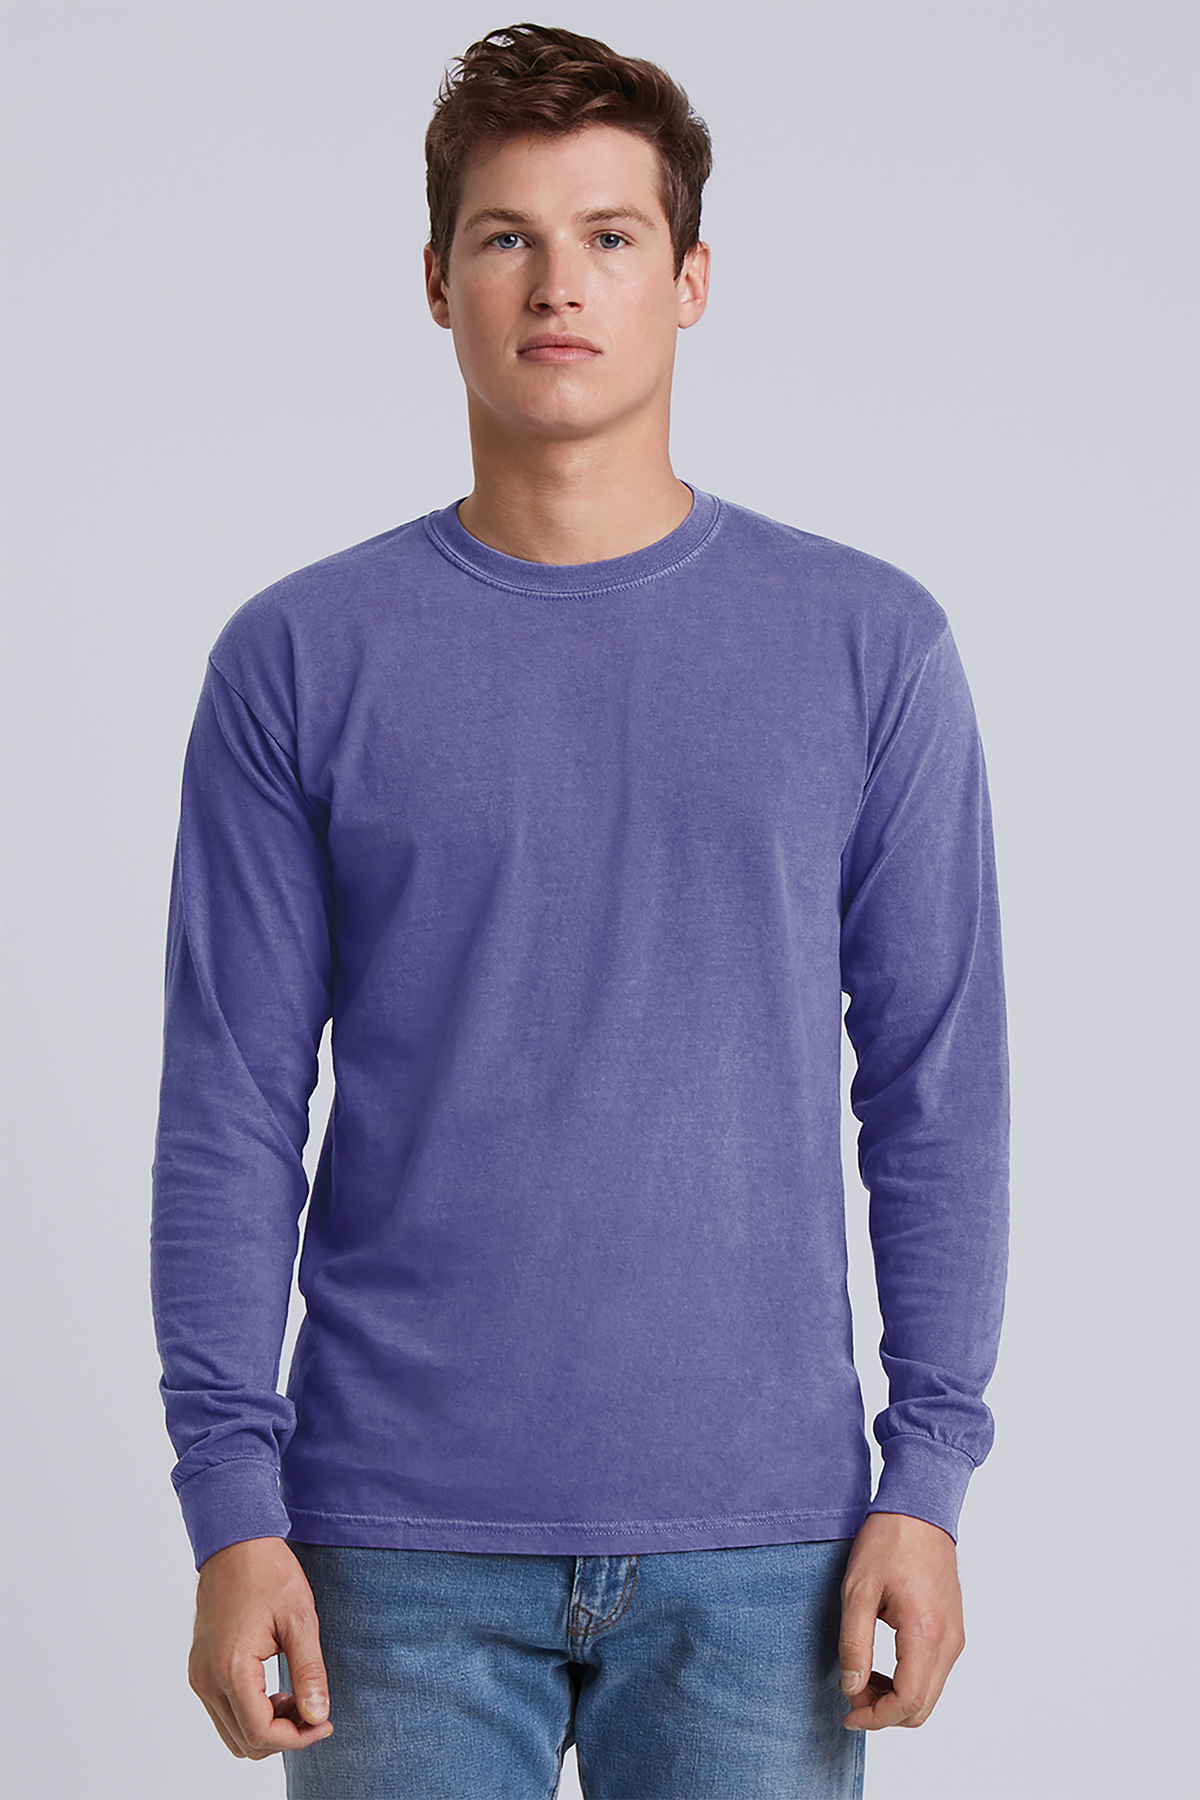 Men's Purple Scales Long Sleeve Fishing Shirt